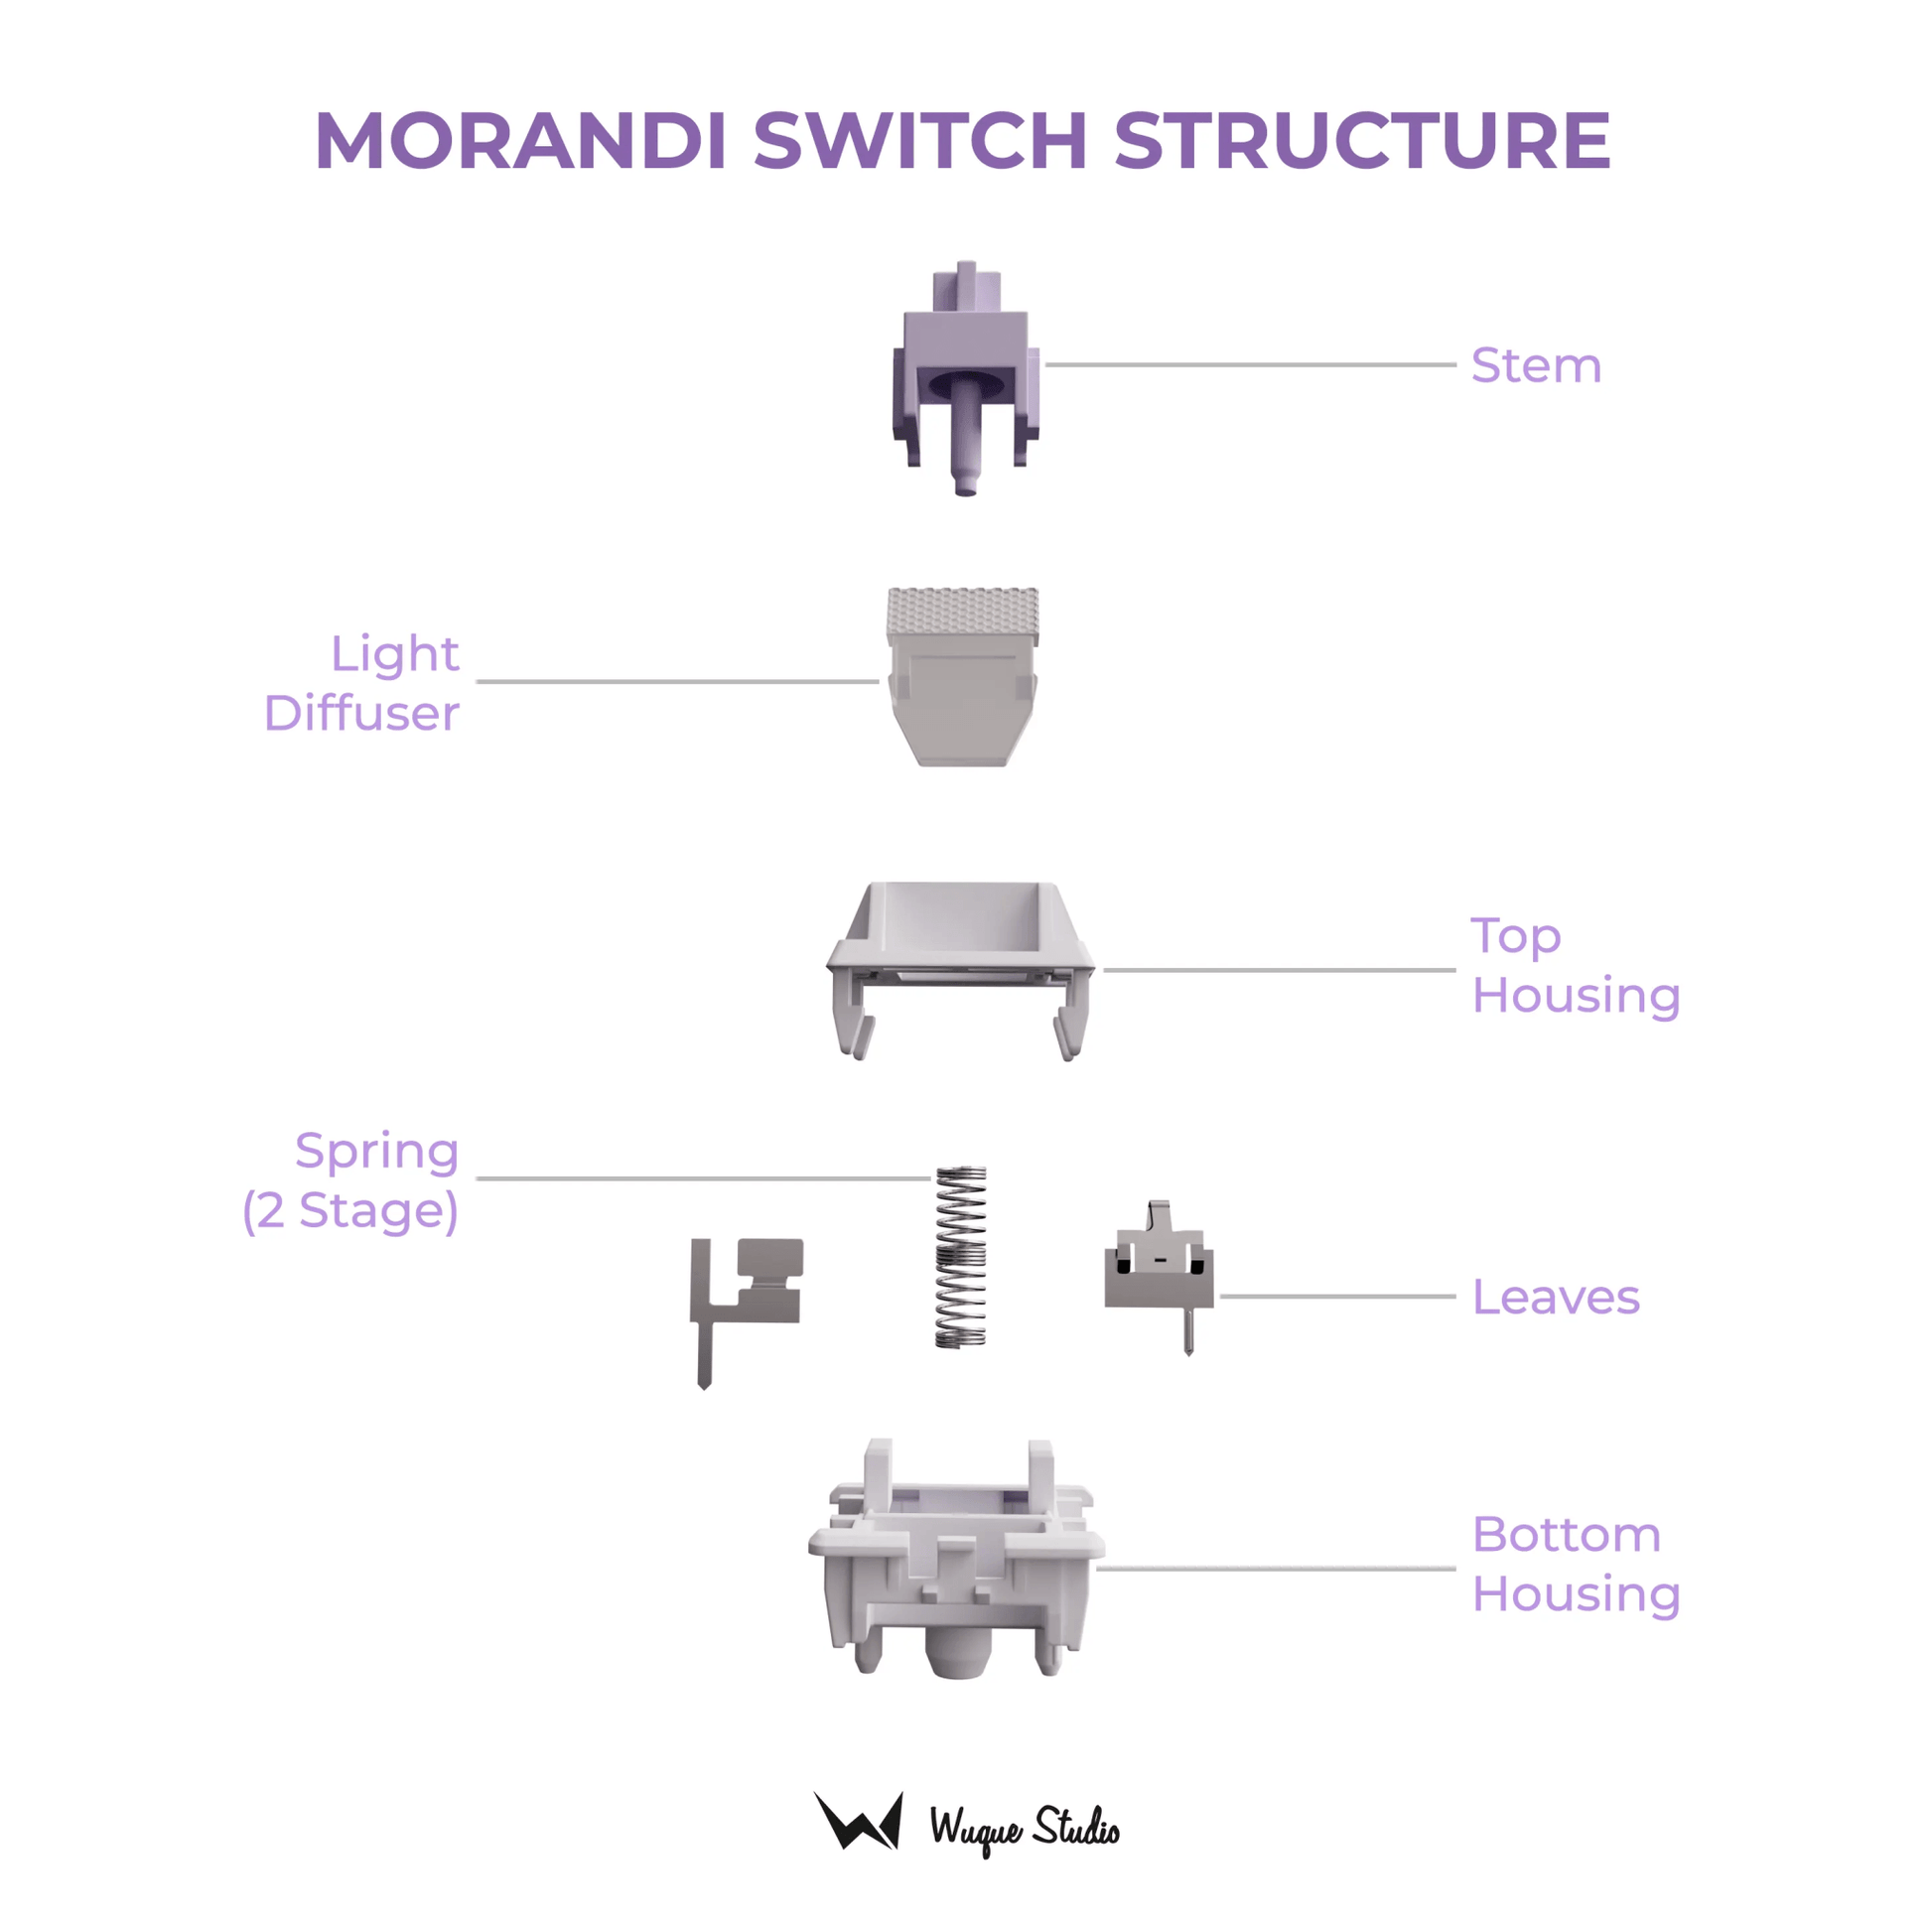 10x WS Morandi Switch - MonacoKeys